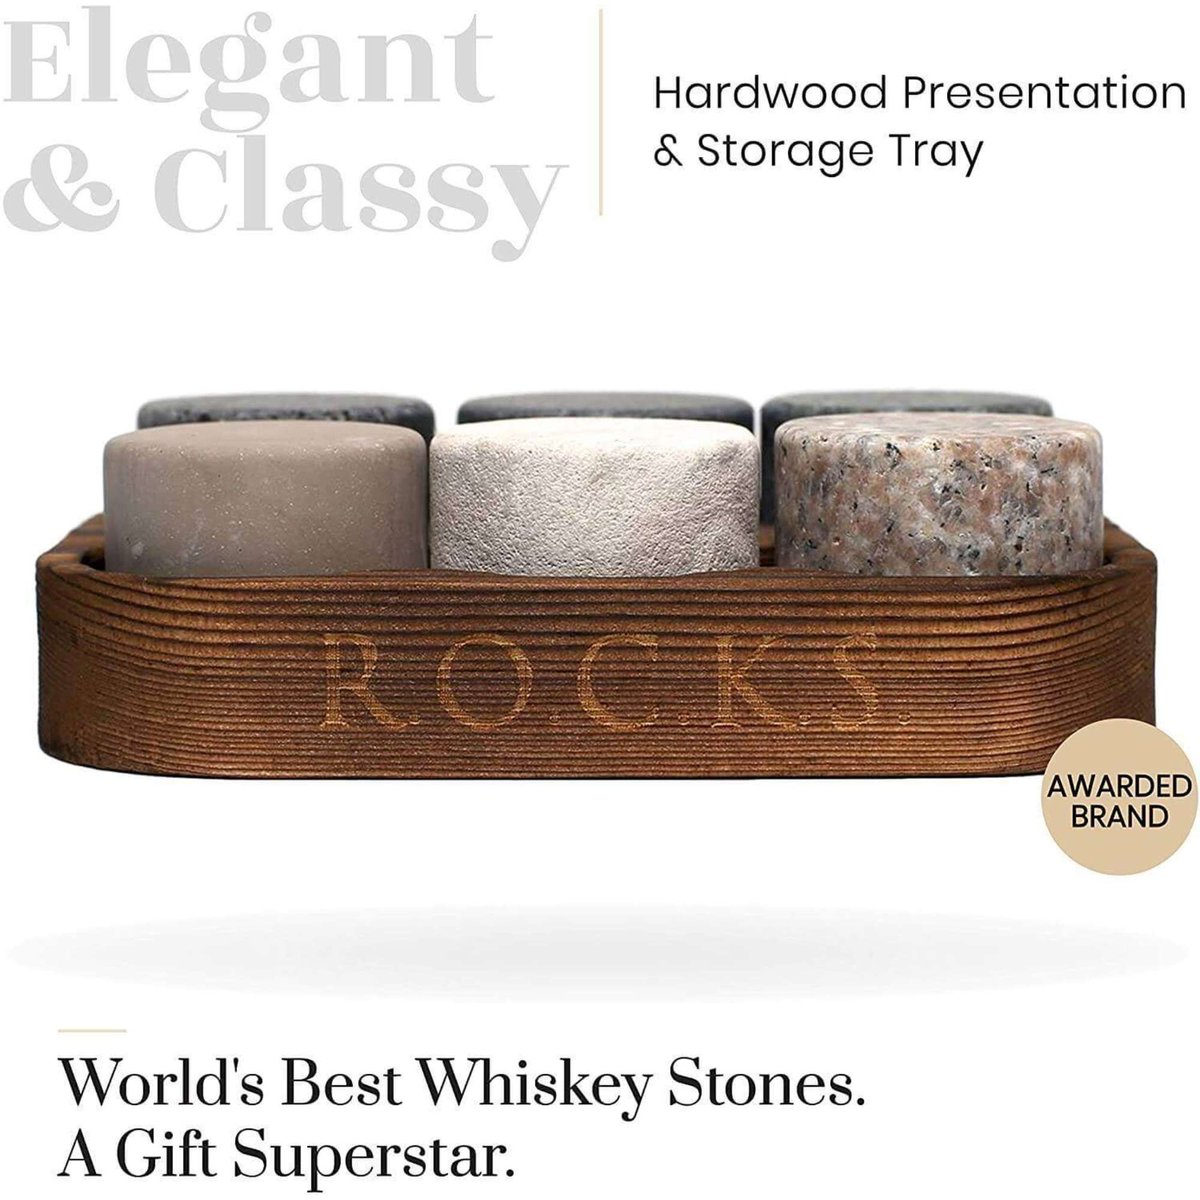 https://images.verishop.com/rocks-the-original-rocks-whiskey-chilling-stones-set-of-6-granite-stones/M00710308278000-1700950215?auto=format&cs=strip&fit=max&w=1200